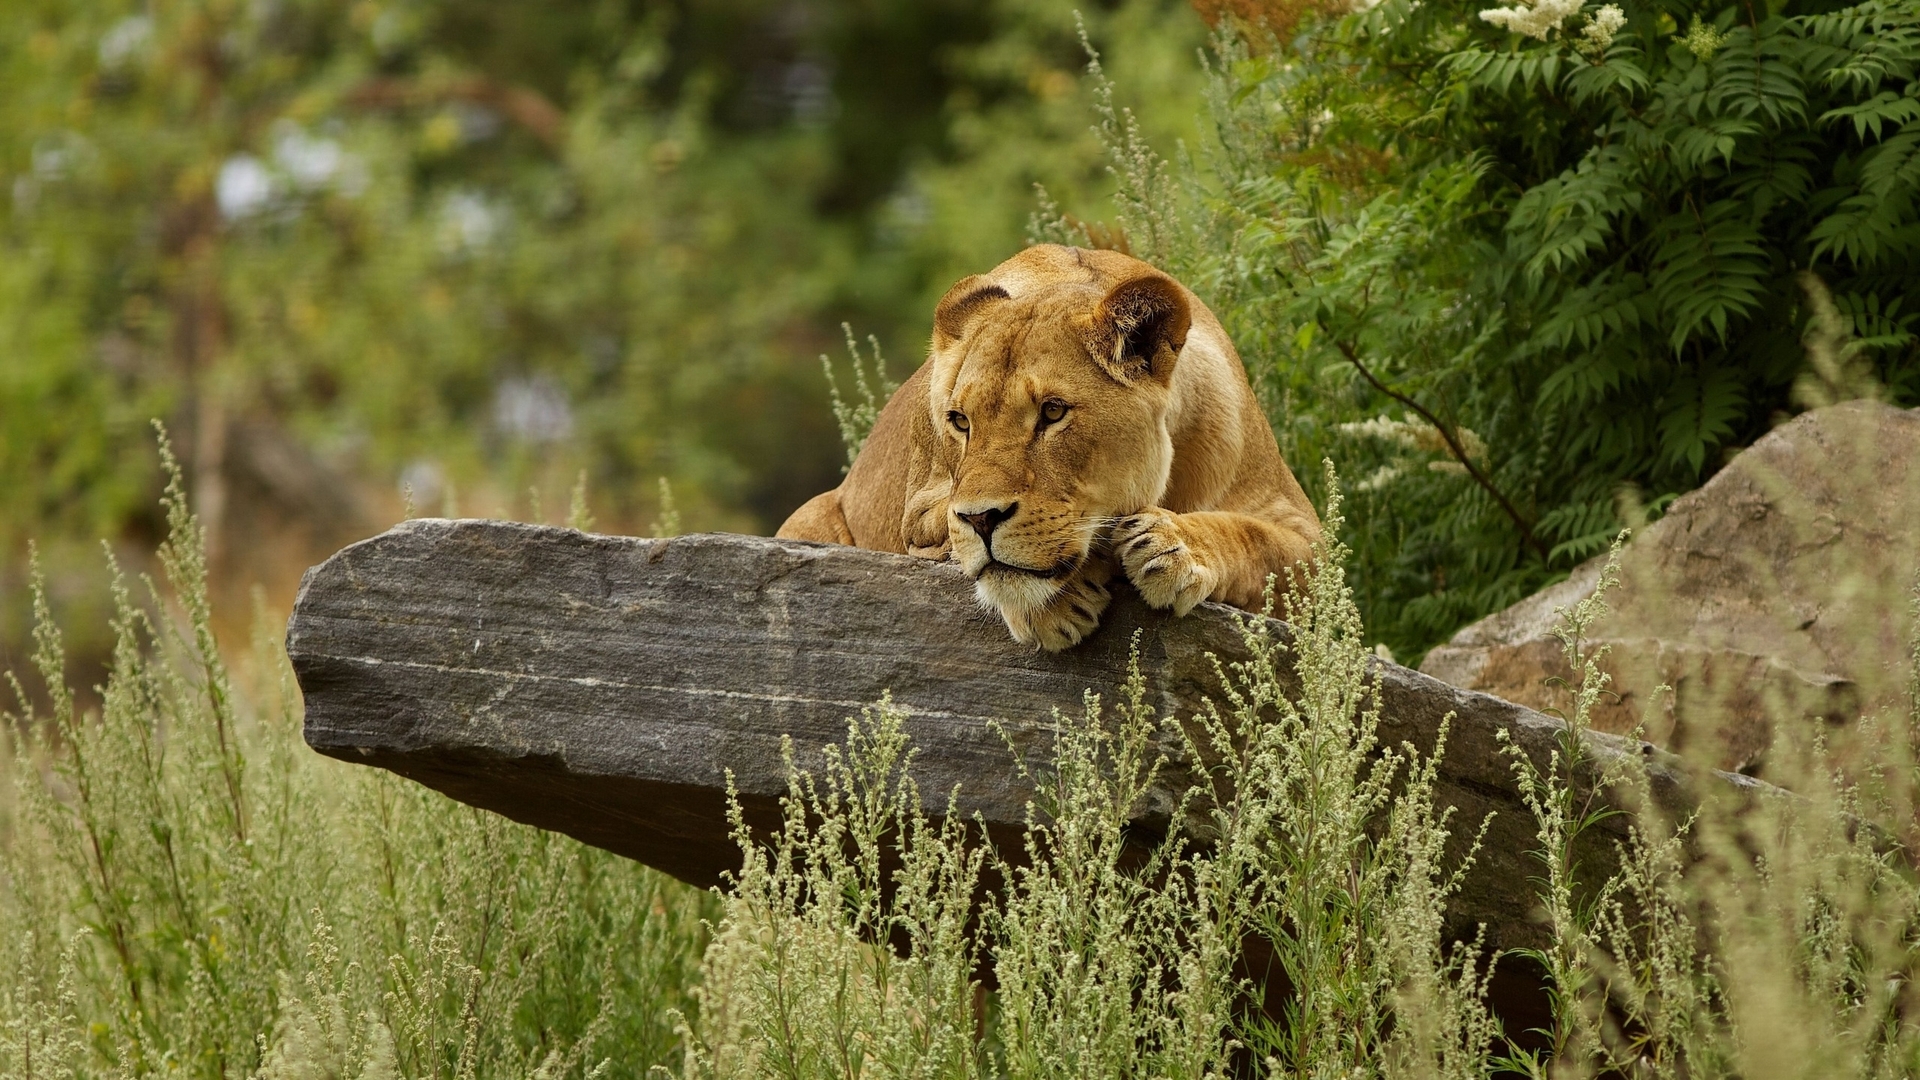 Image: Lioness, look, eyes, watching, lies, cat, muzzle, predator, stone, greens